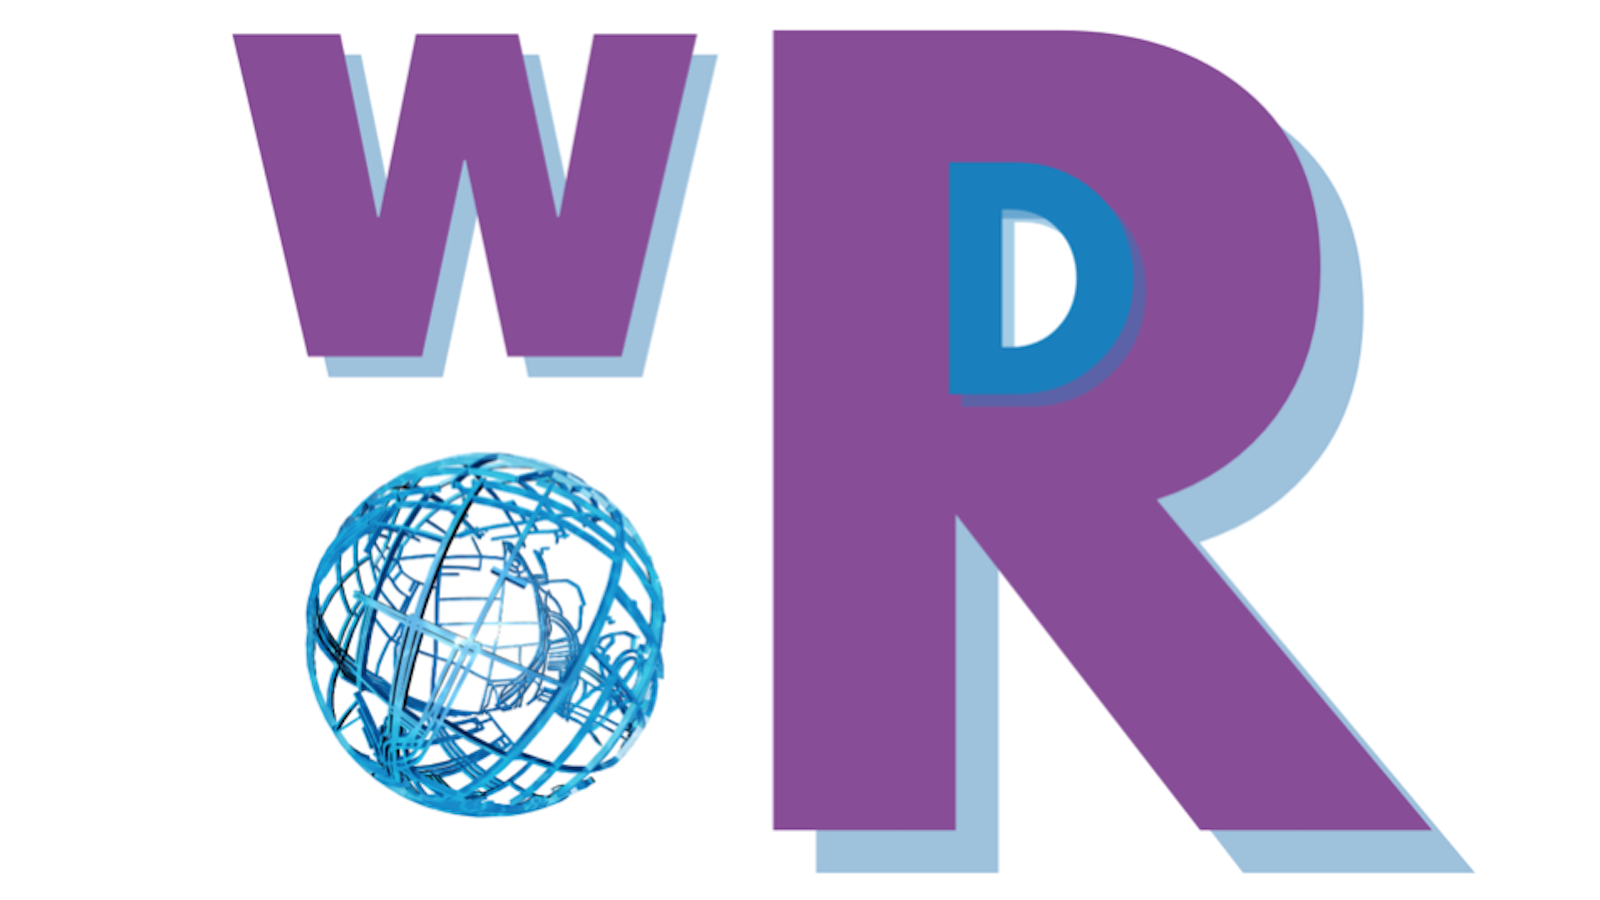 W R and globe logo